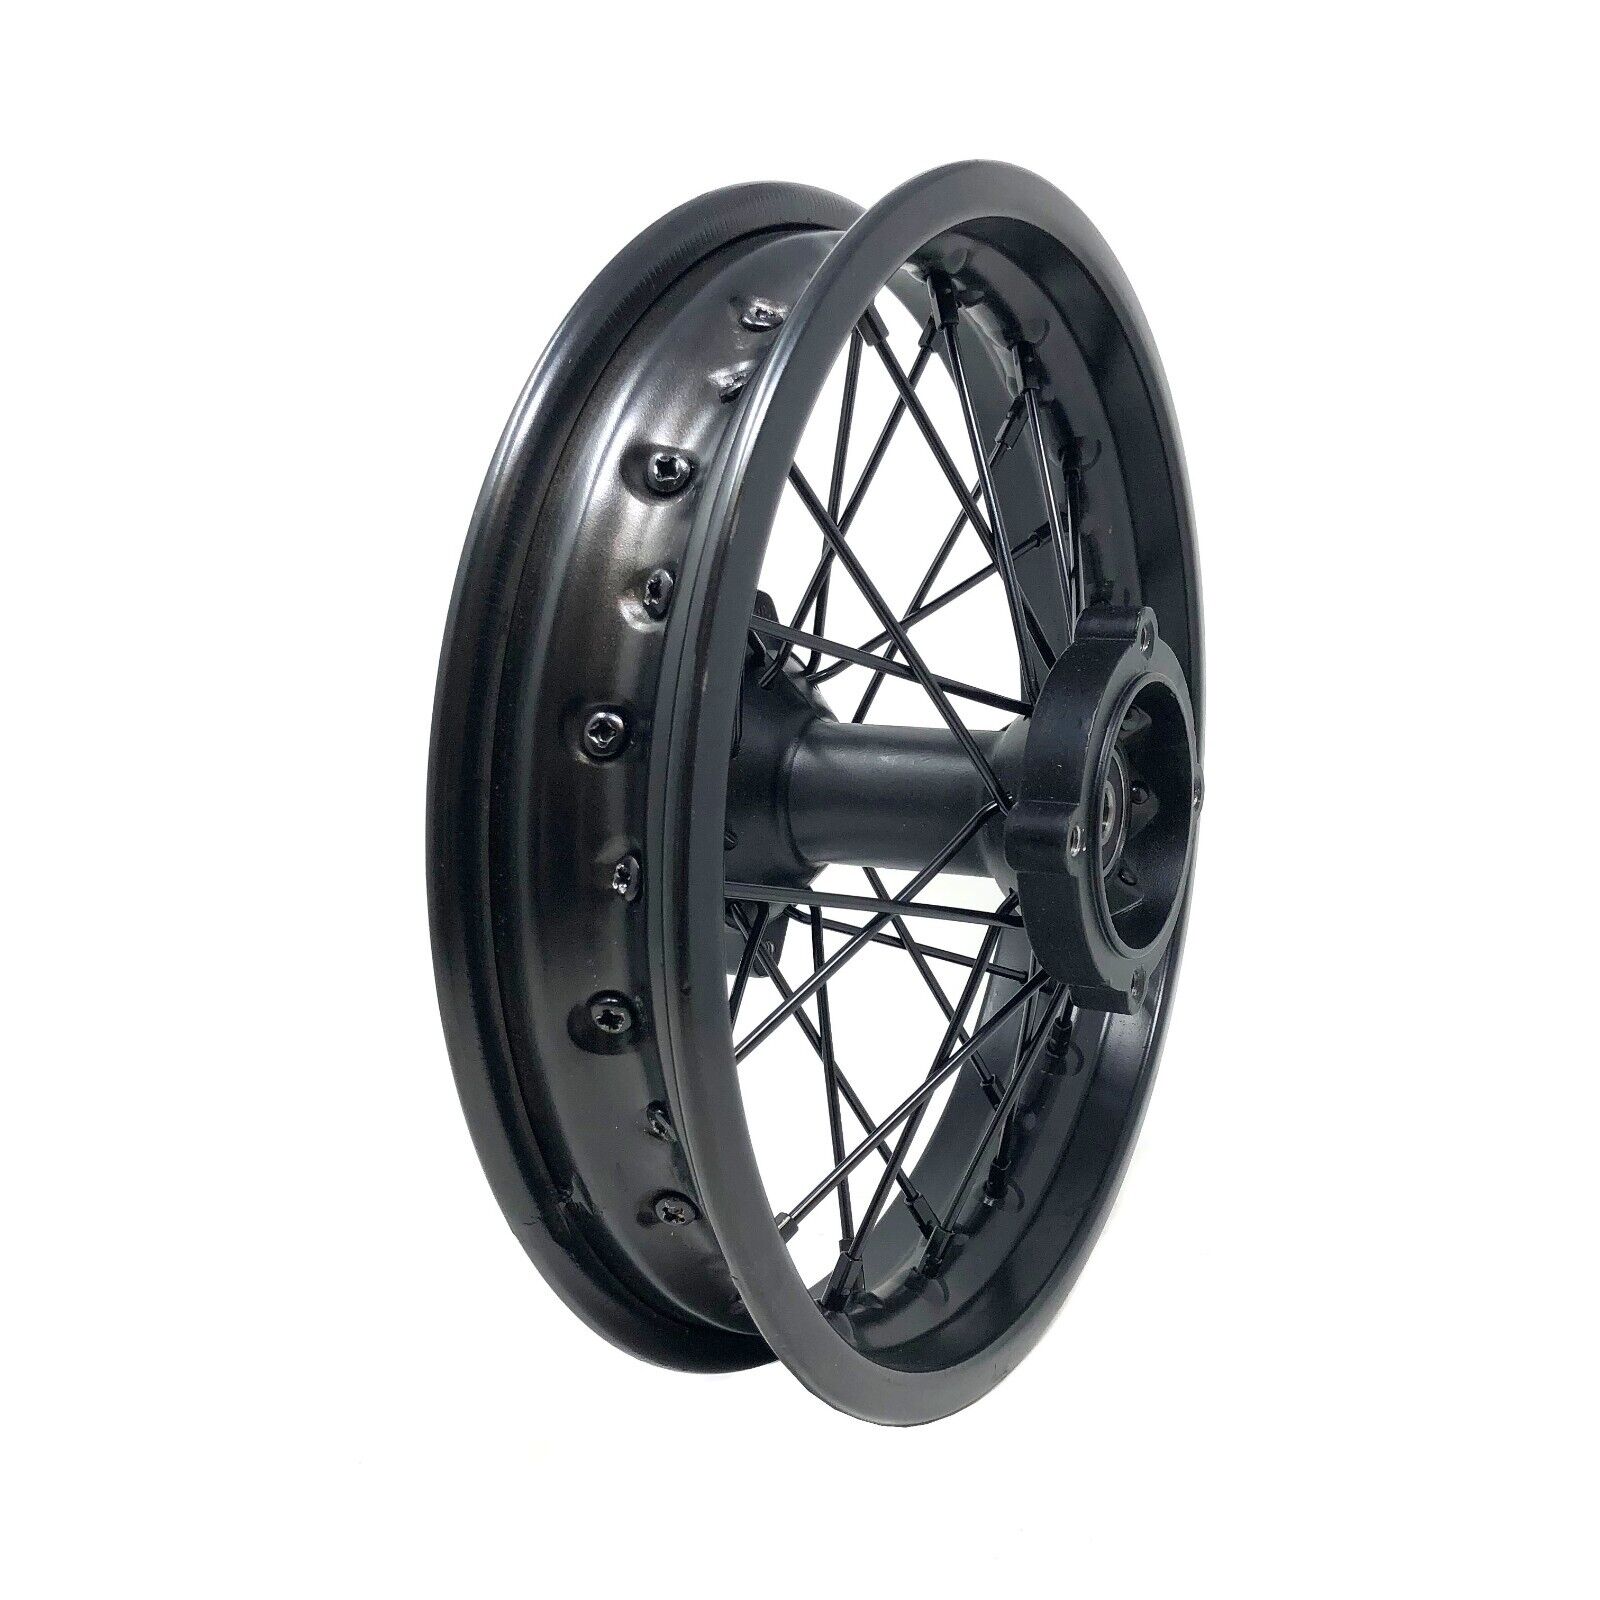 MYK Wheel Rim Rear 1.85x12” fits tire 80/100-12 (3.00-12) for Off-Road Dirt Bike